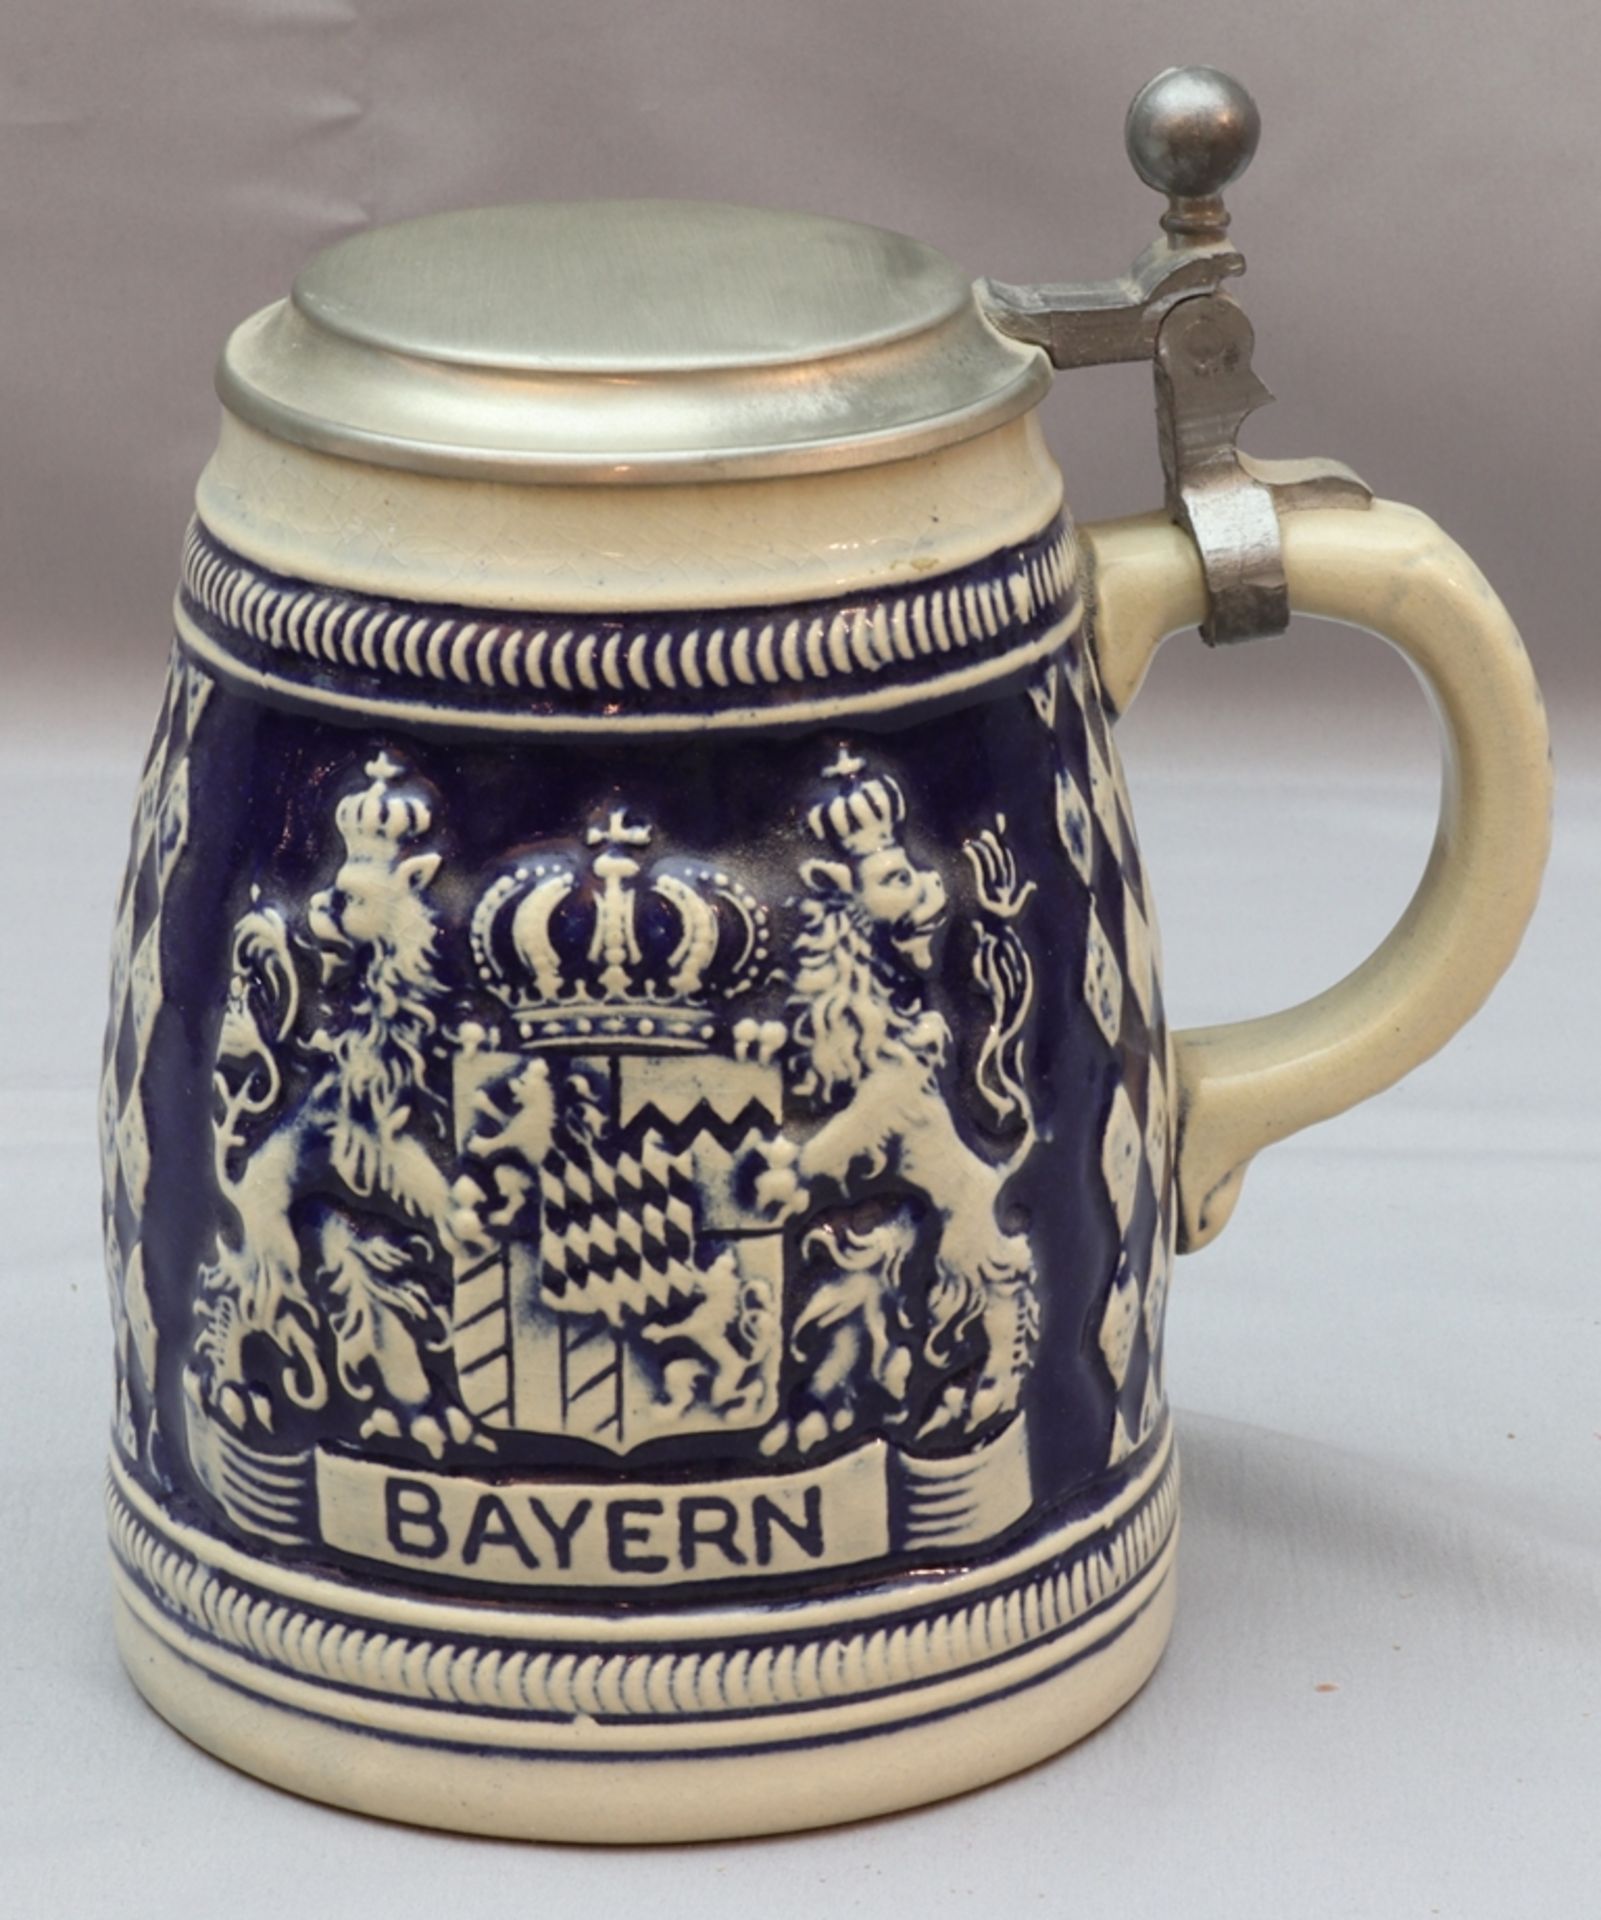 Bavarian beer mug, early 20th century, German